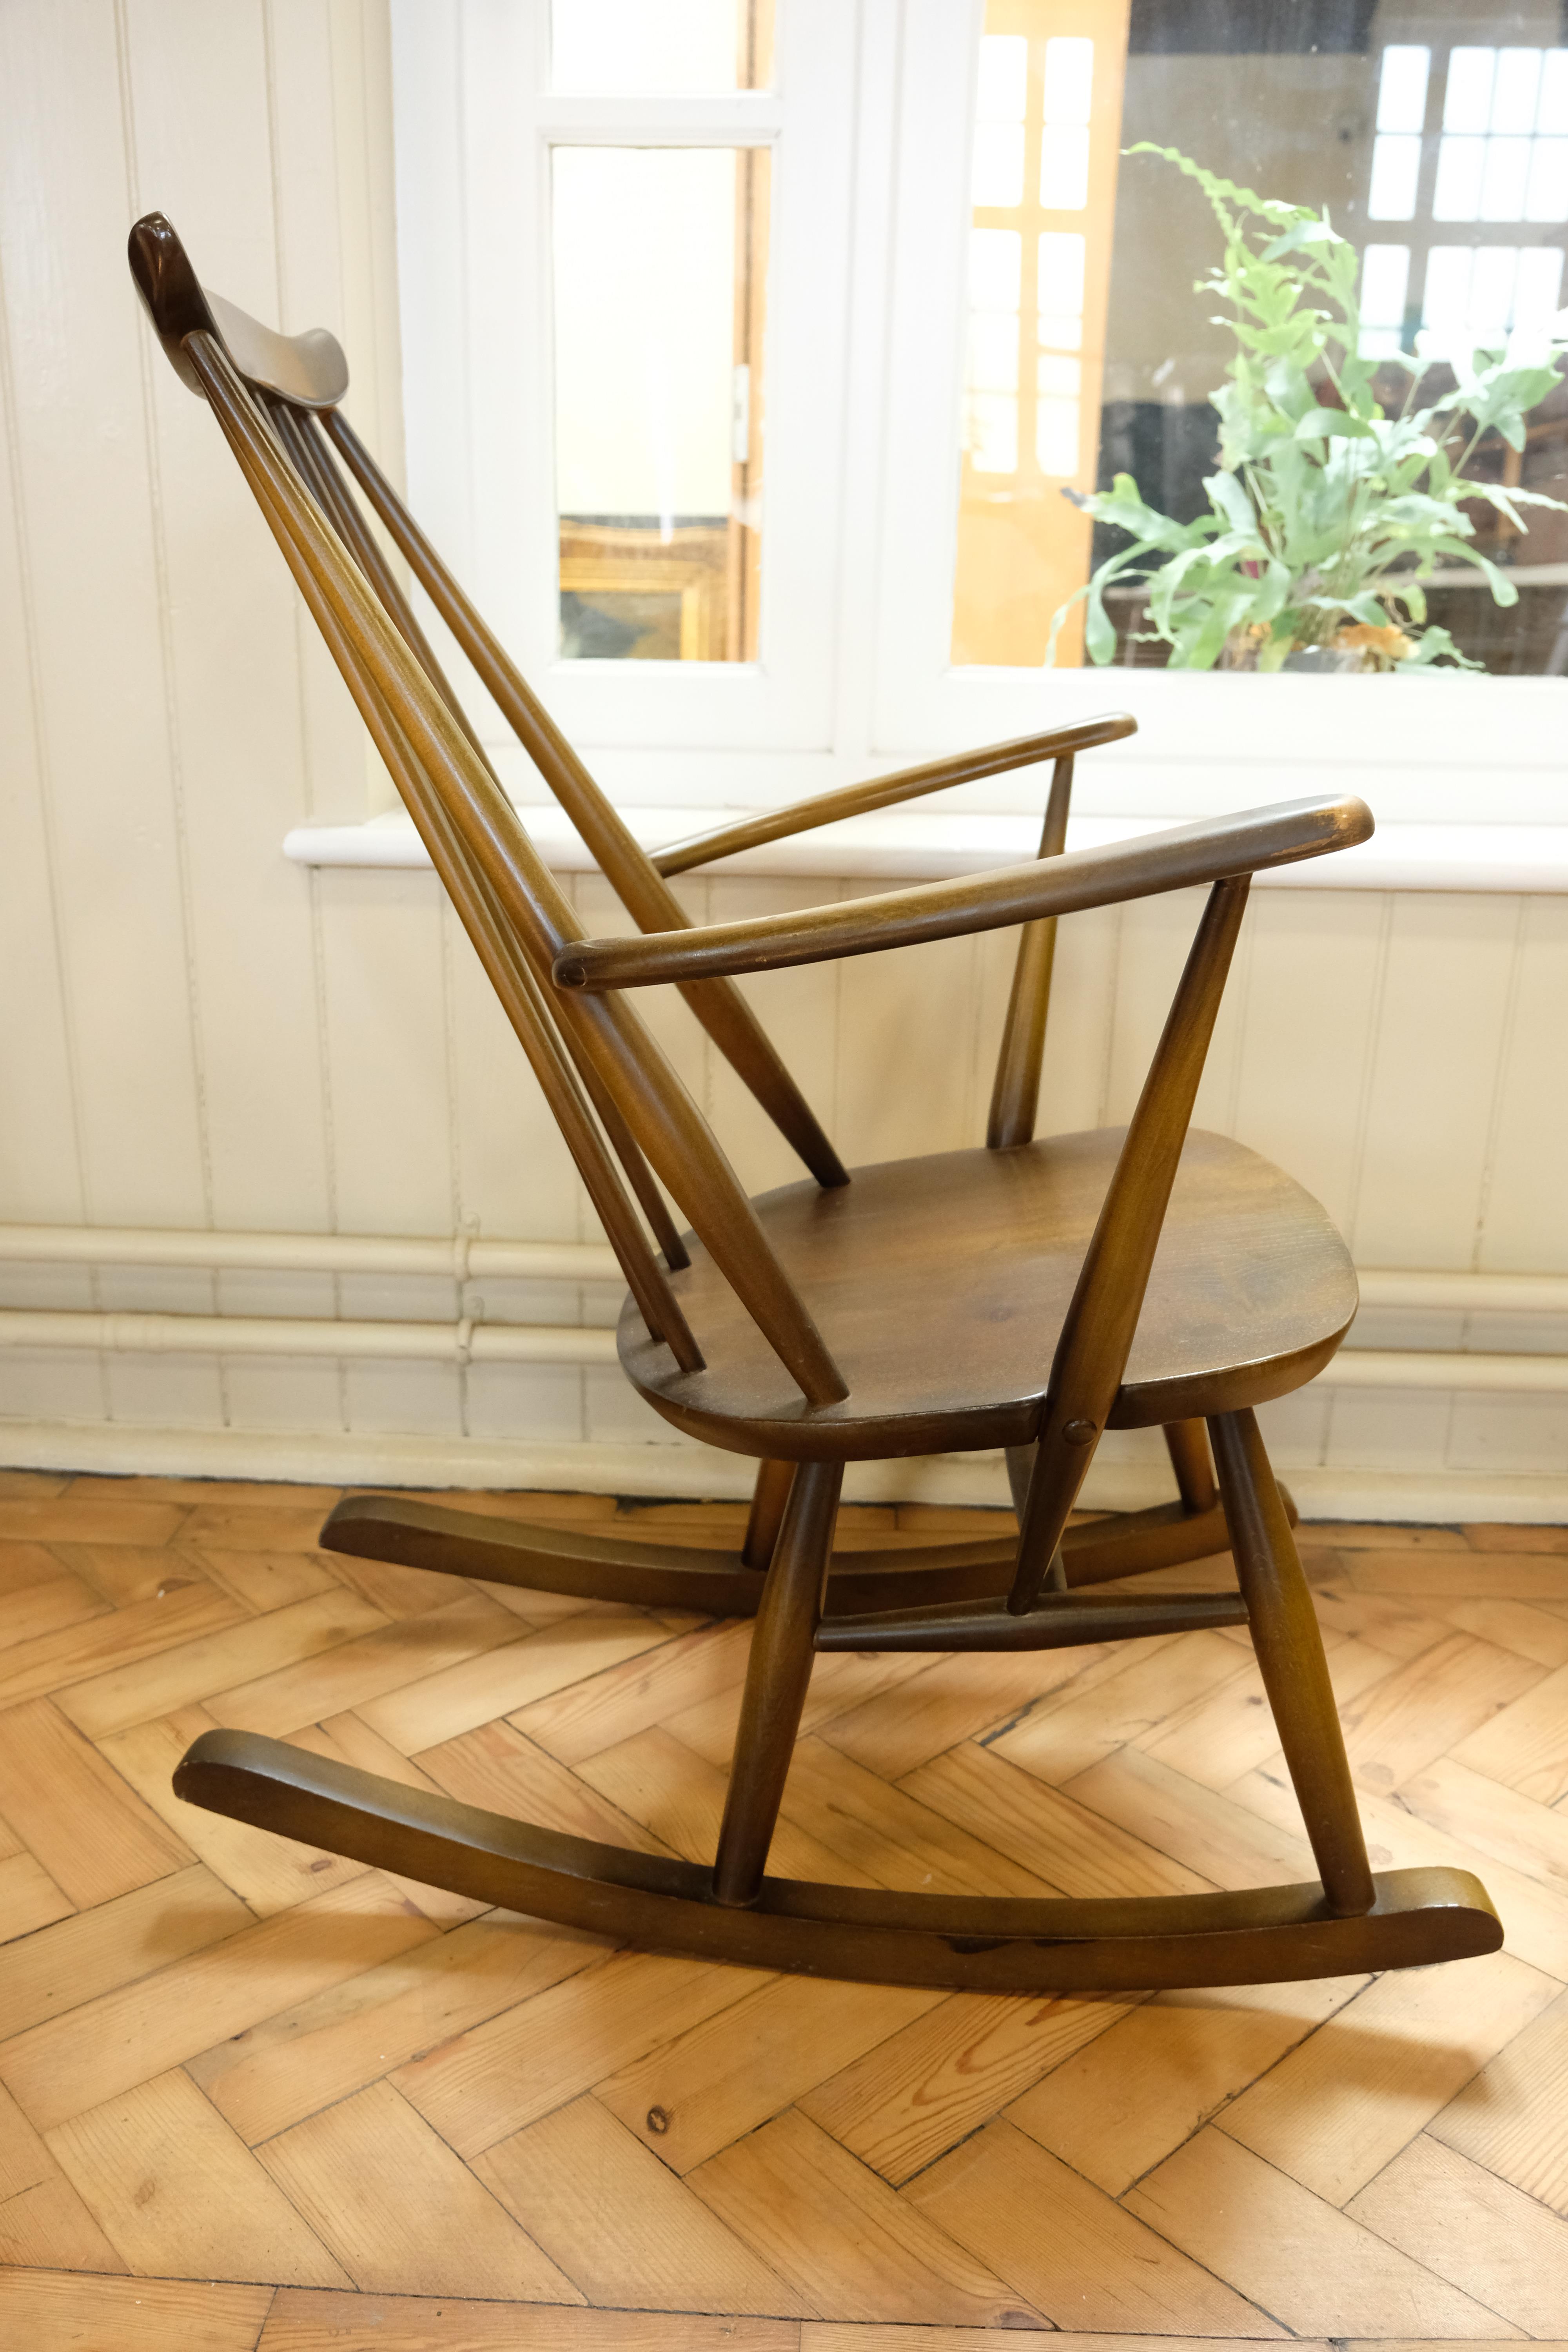 An Ercol rocking chair, circa 1960s - Image 2 of 3